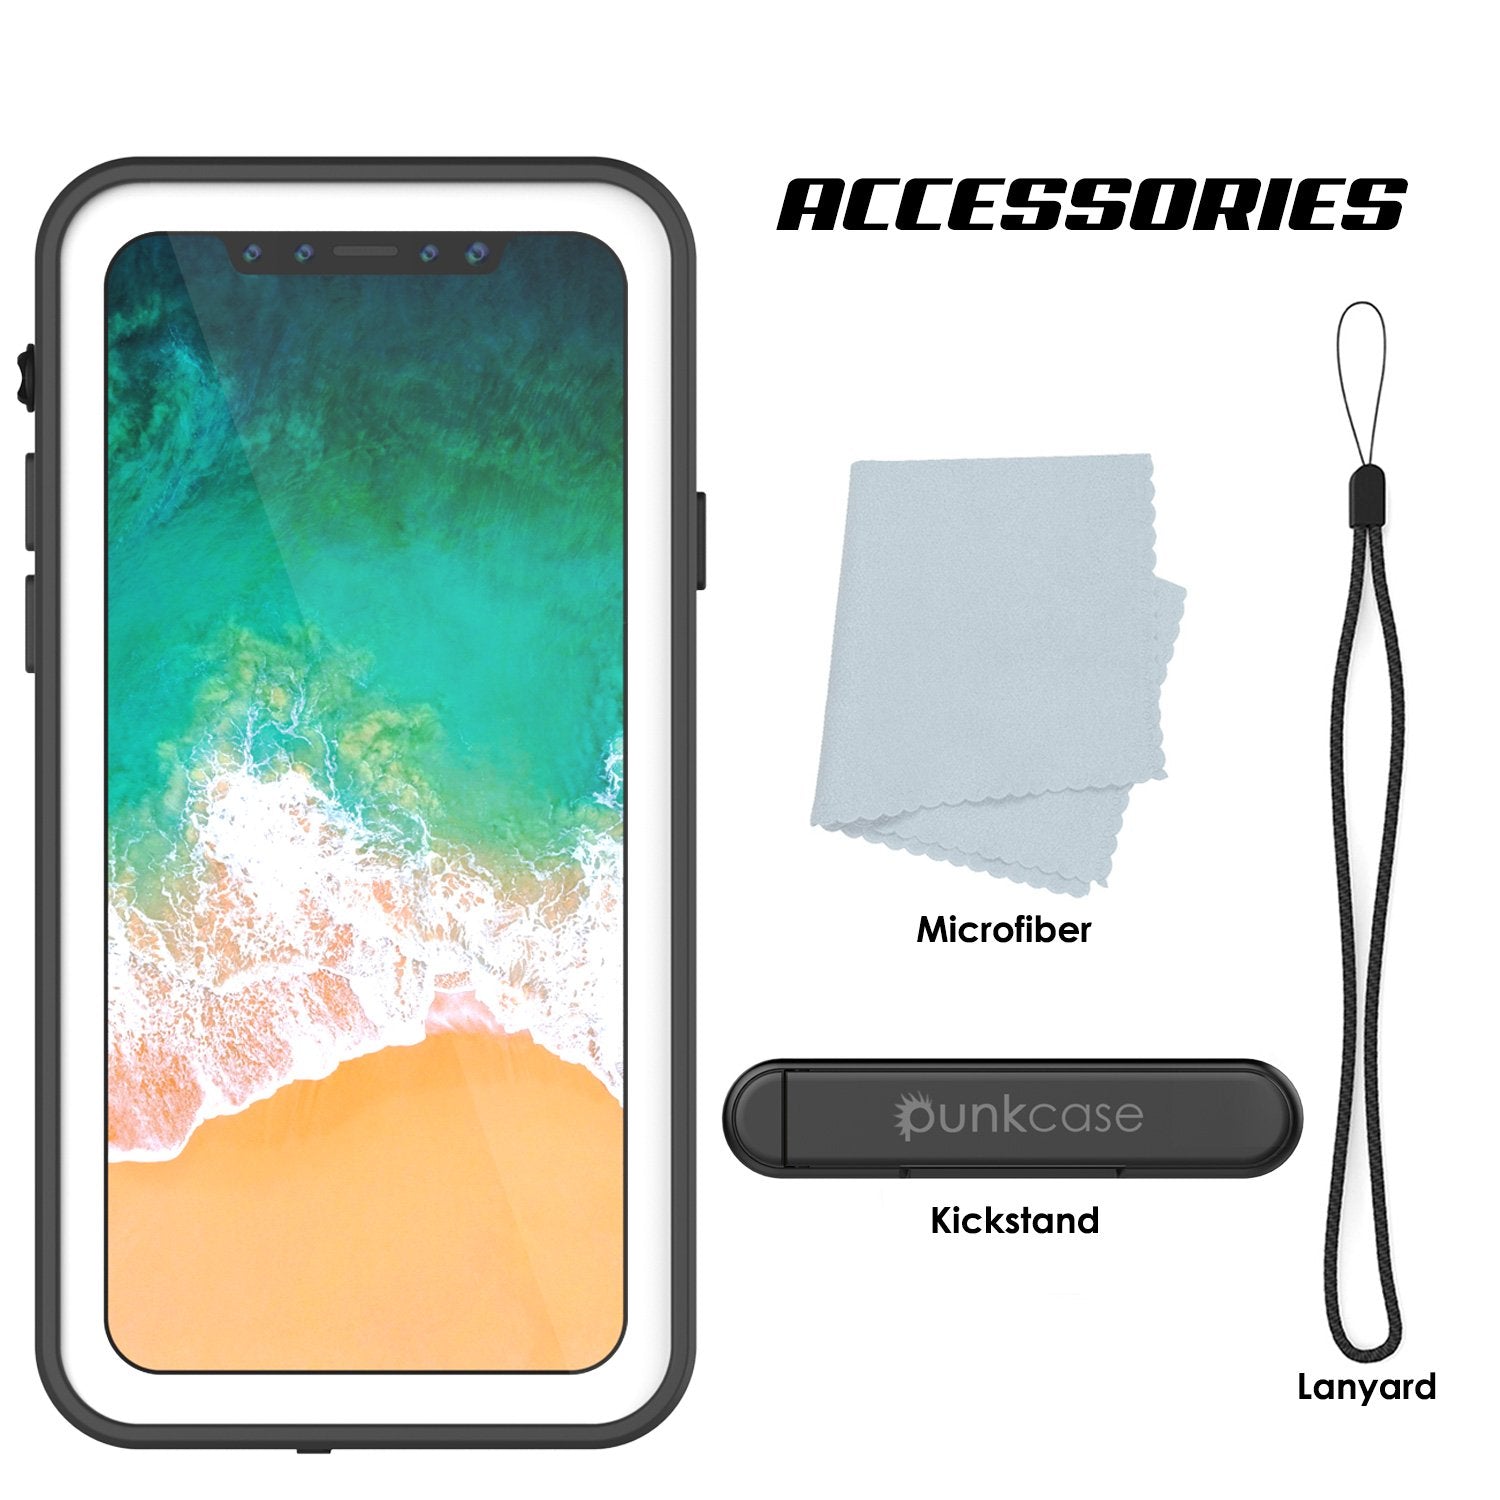 iPhone X Waterproof IP68 Case, Punkcase [White] [StudStar Series] [Slim Fit] [Dirtproof] - PunkCase NZ